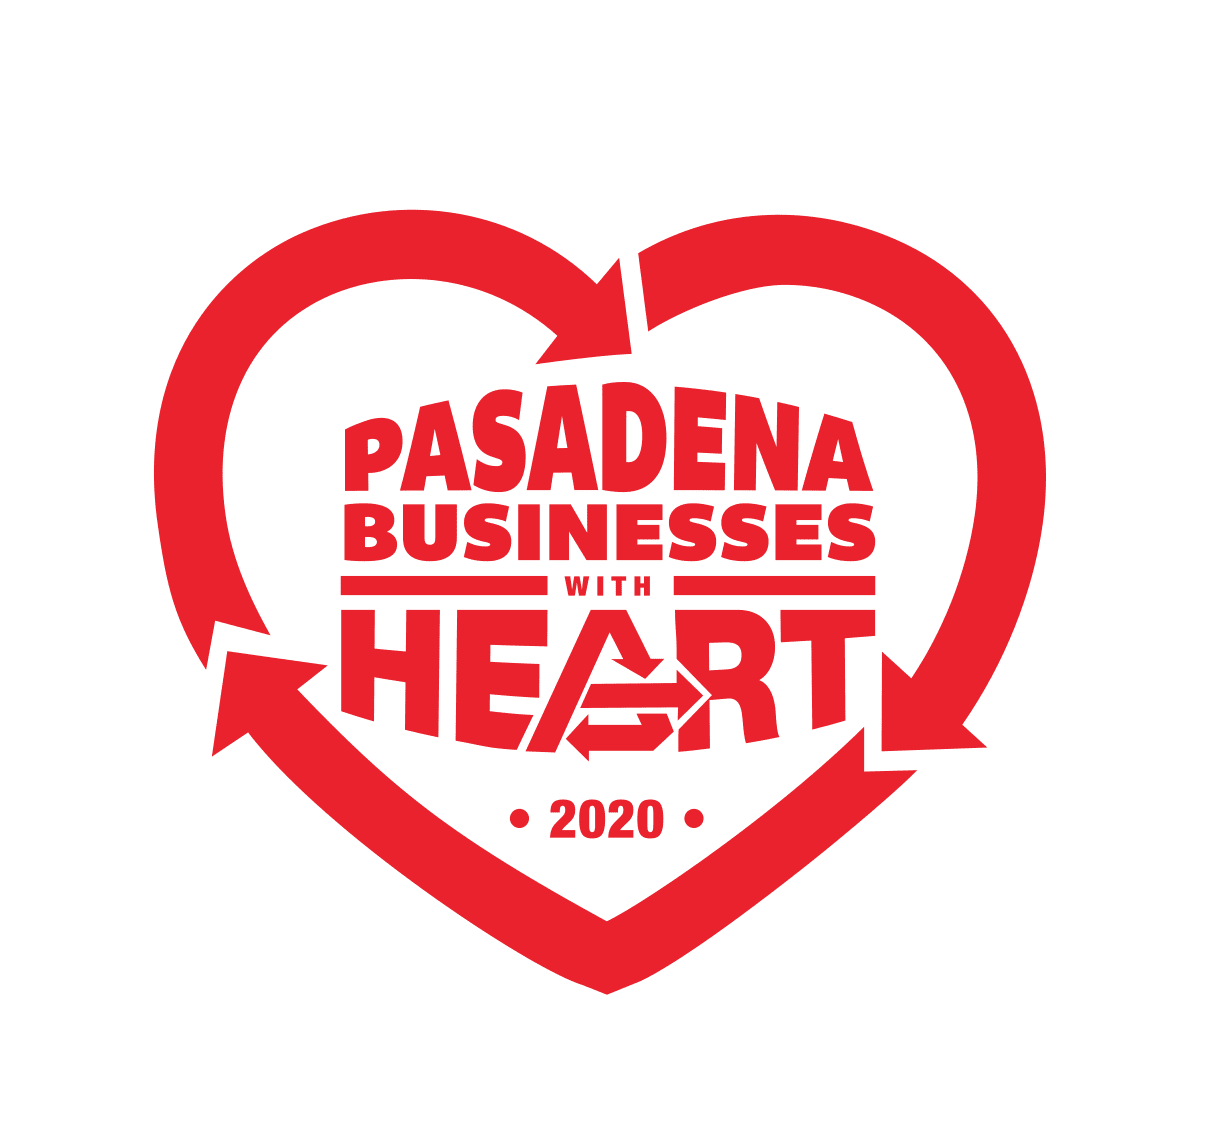 11Pasadena with Heart